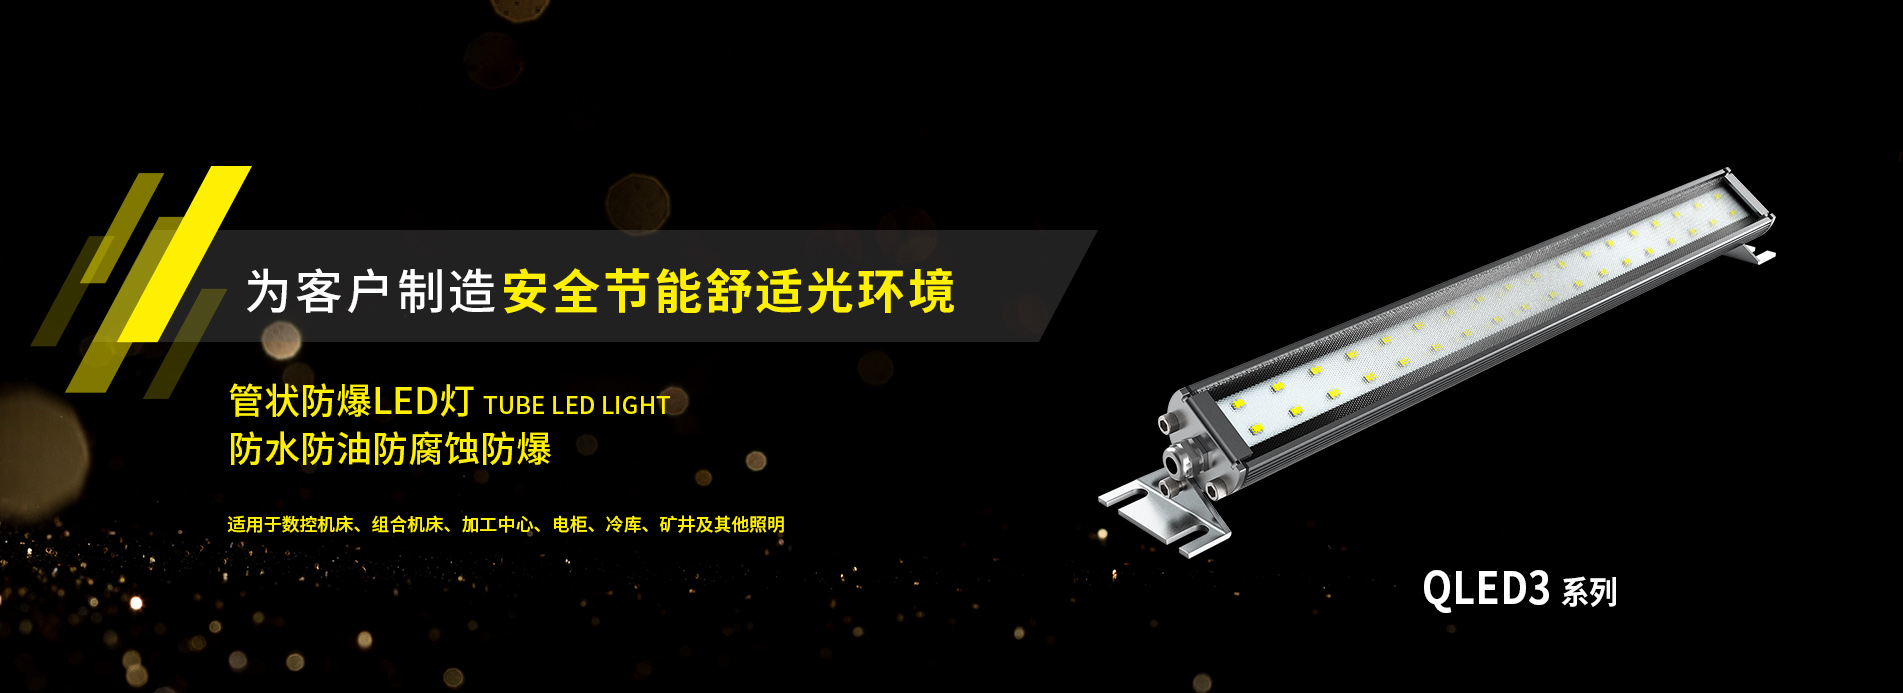 cnc machine led work light 